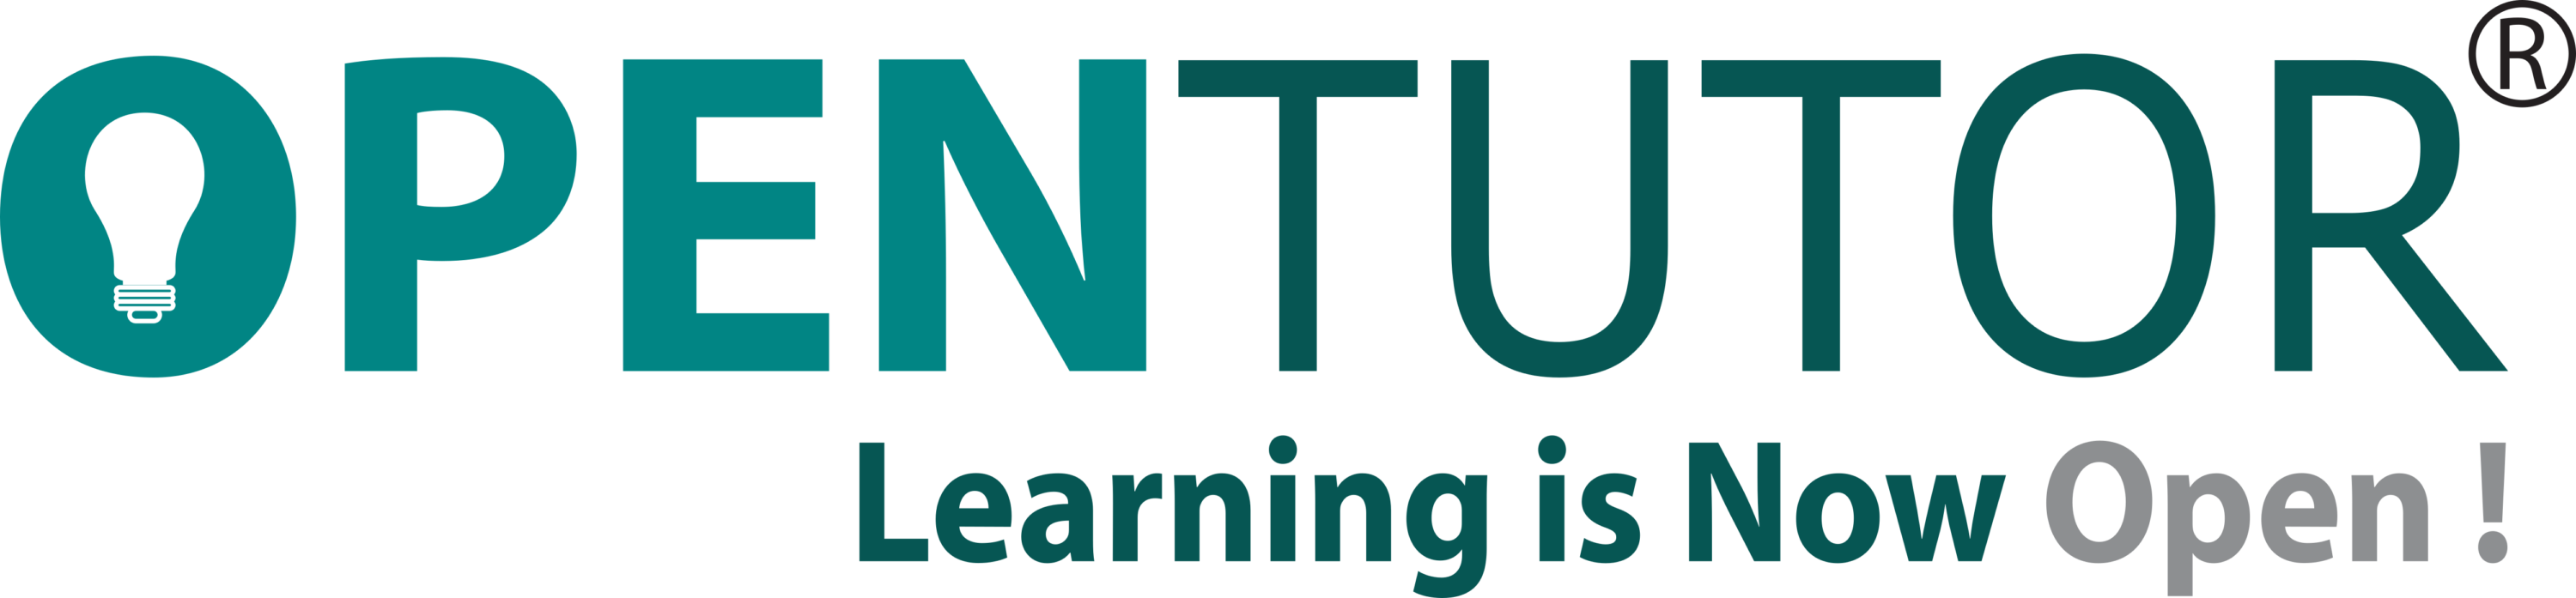 Opentutor Logo